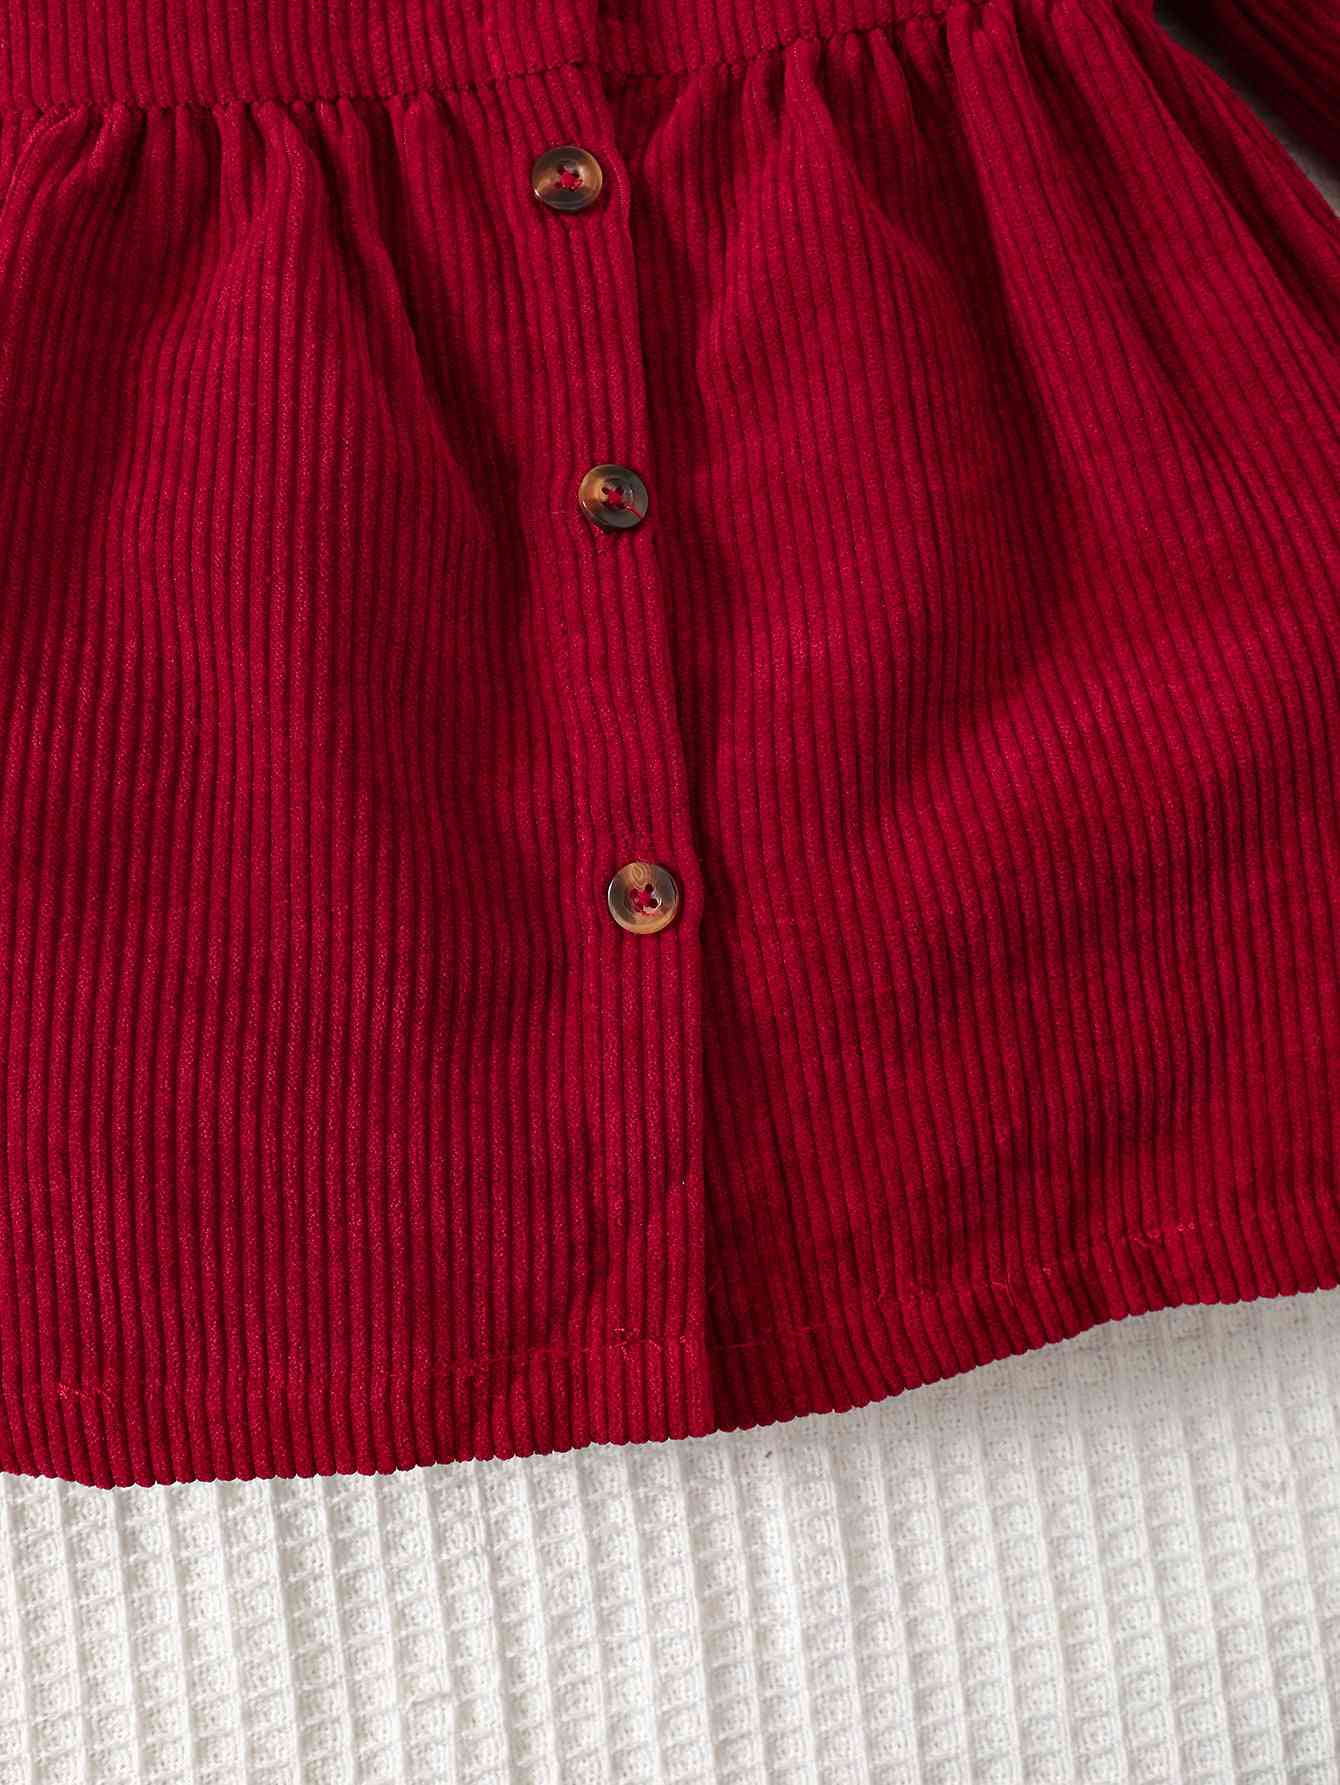 Peter Pan Collar Buttoned Long Sleeve Dress Baby JT's Designer Fashion